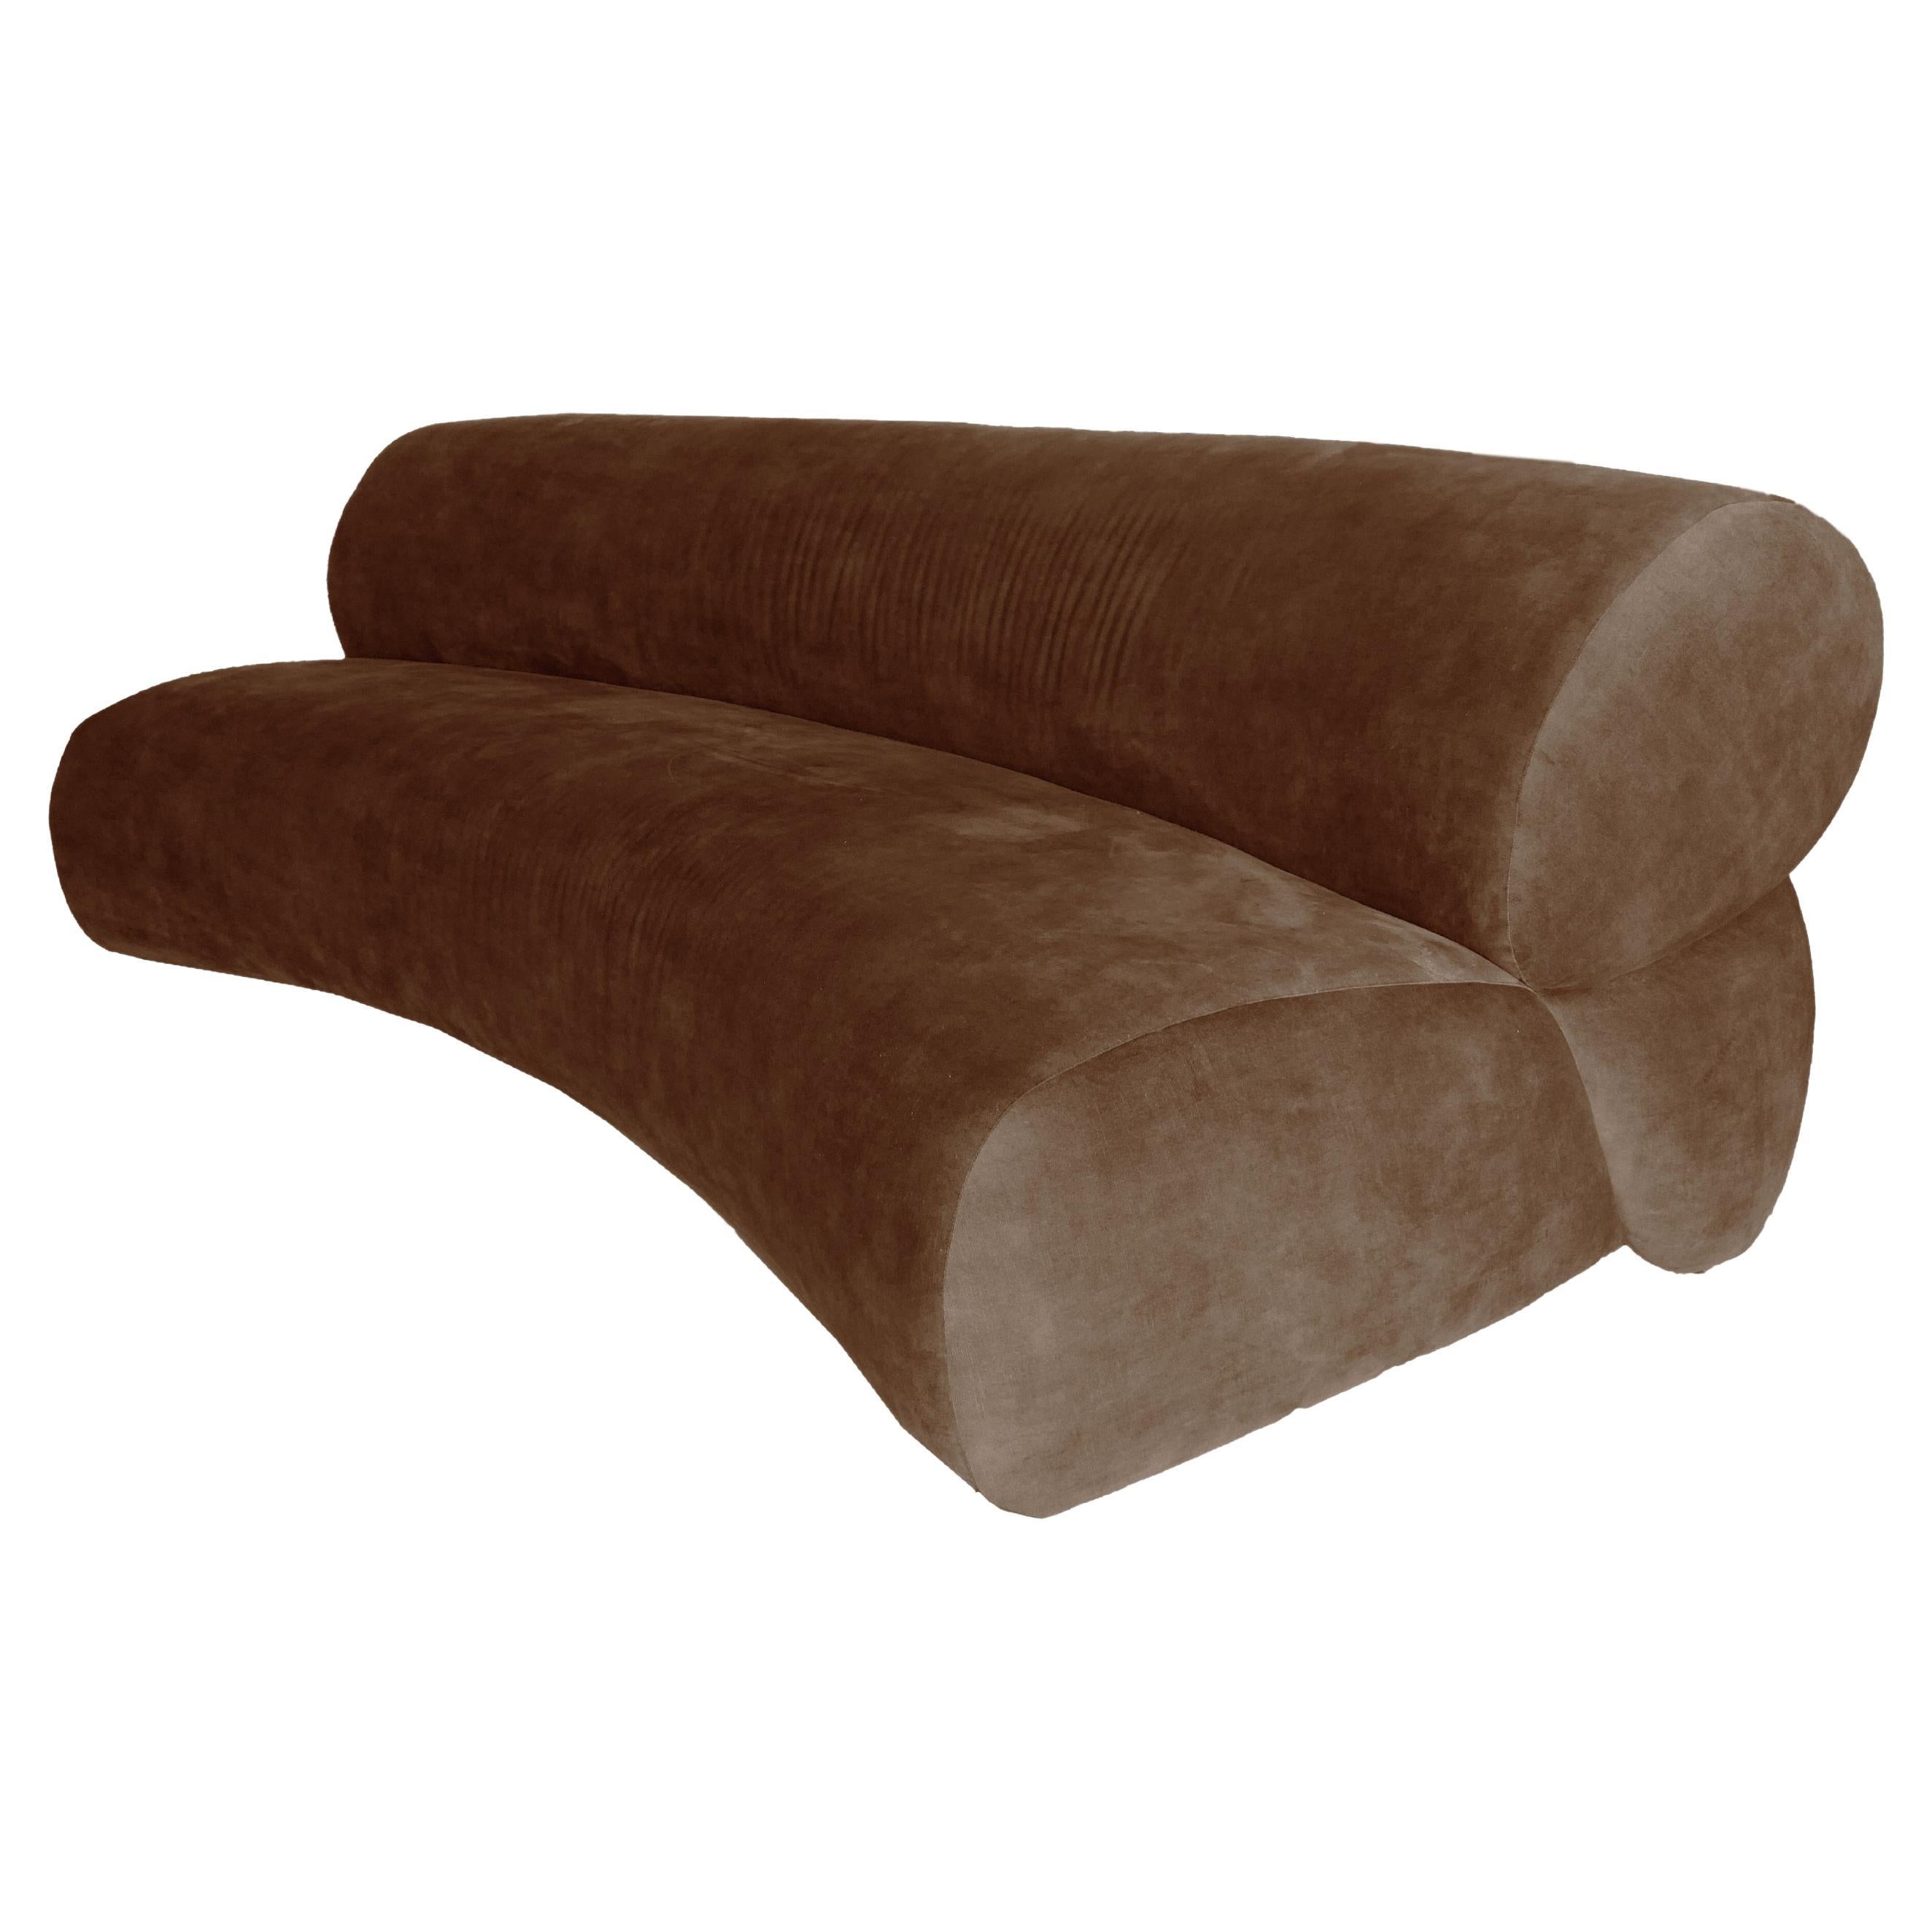 PIPA Curved Sofa Chocolate Brown velvet, Contemporary style by Sergio Prieto For Sale